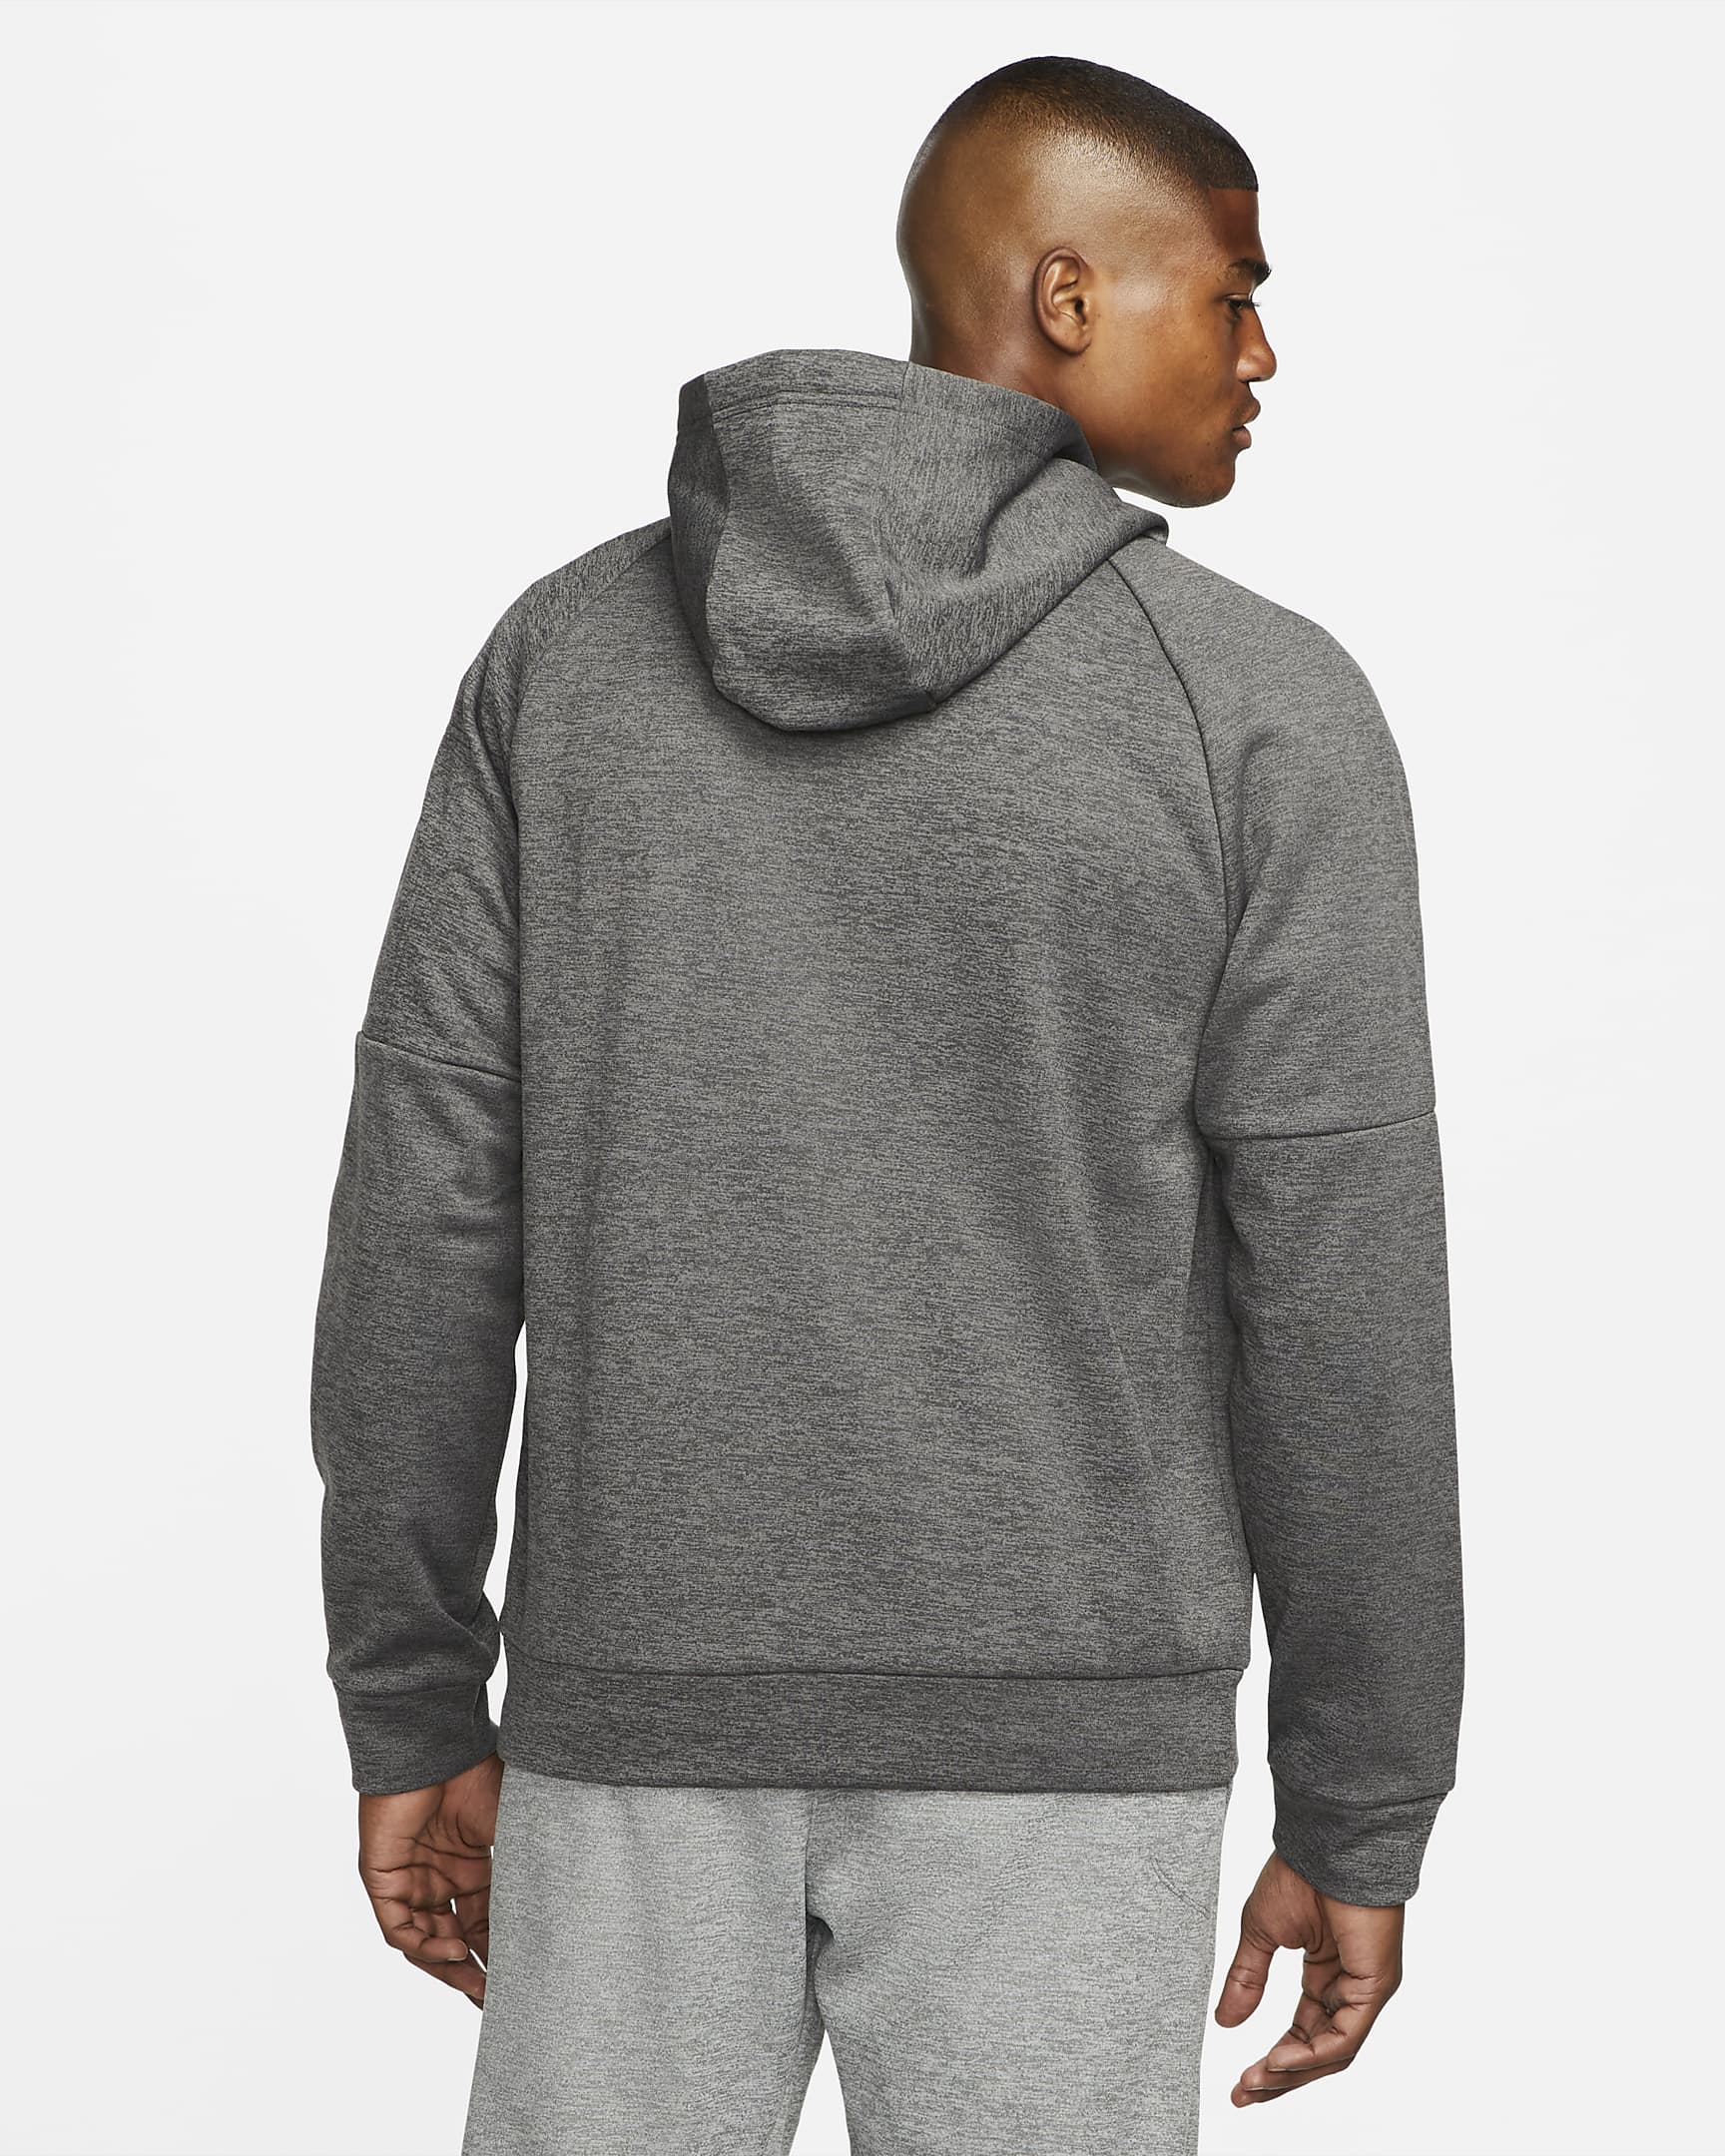 Nike Therma Jacket - Fit - Grey/Black